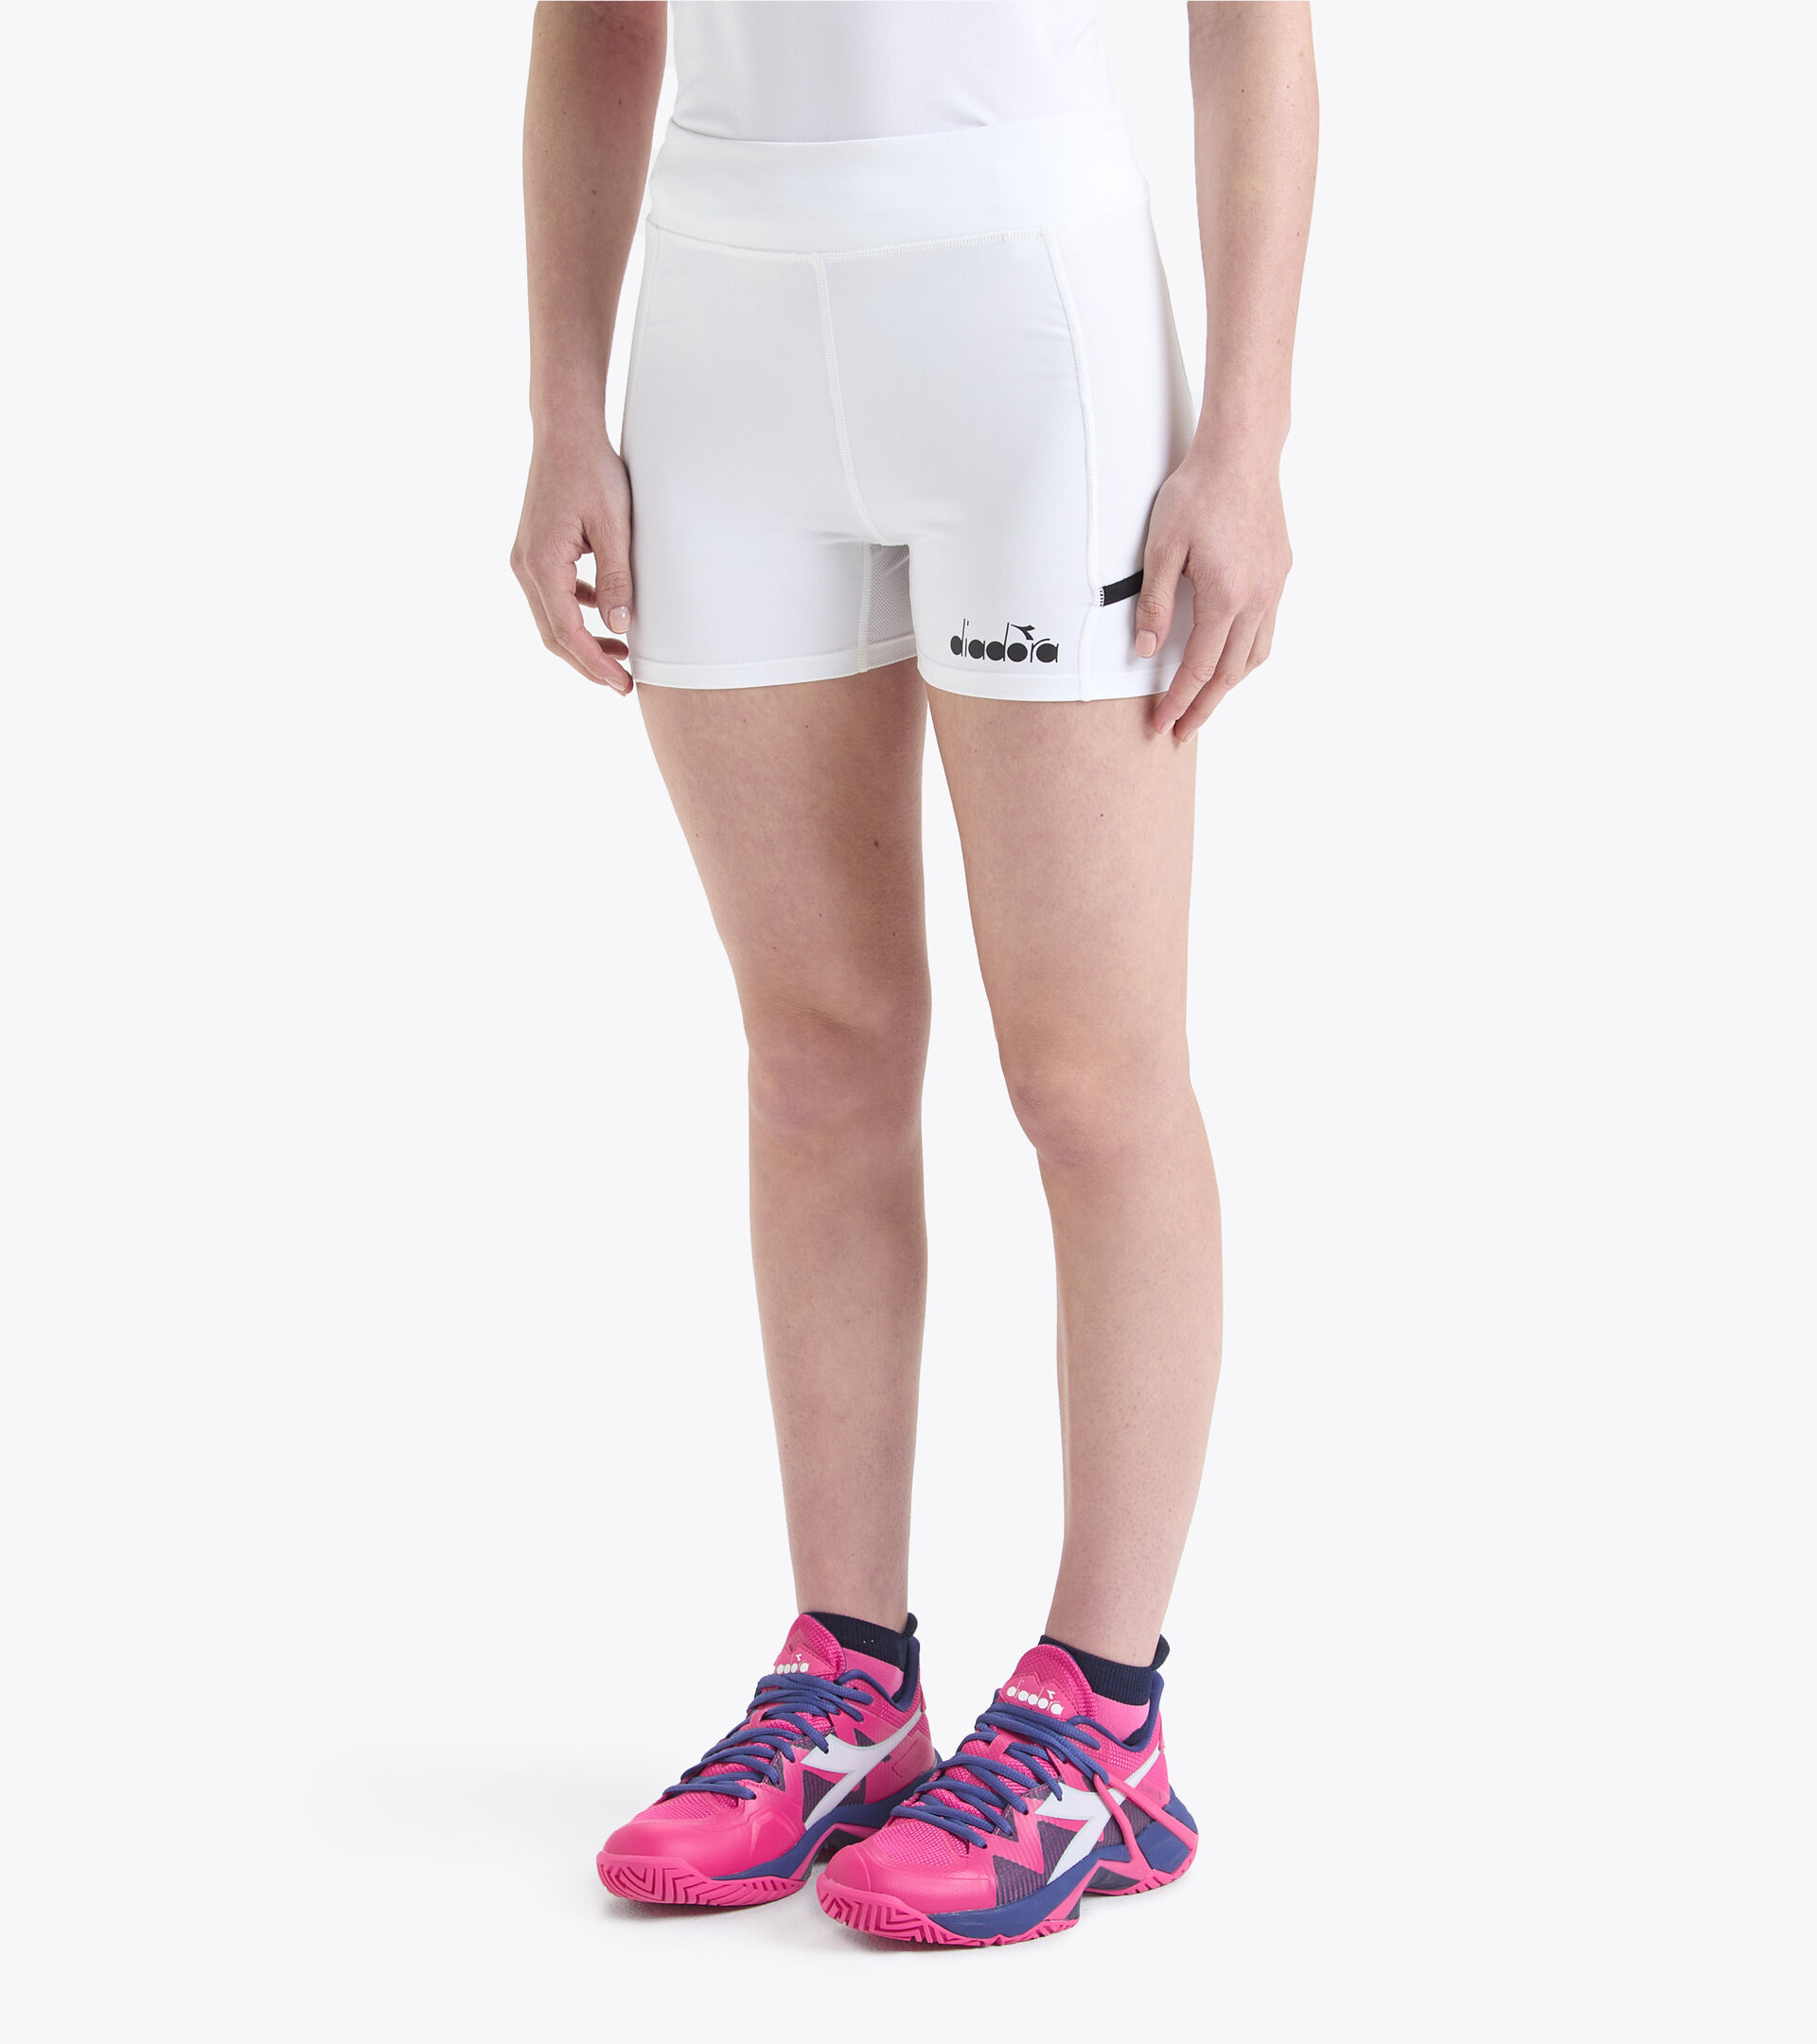 L. SHORT TIGHTS POCKET Tennis shorts - Women - Diadora Online Store SA